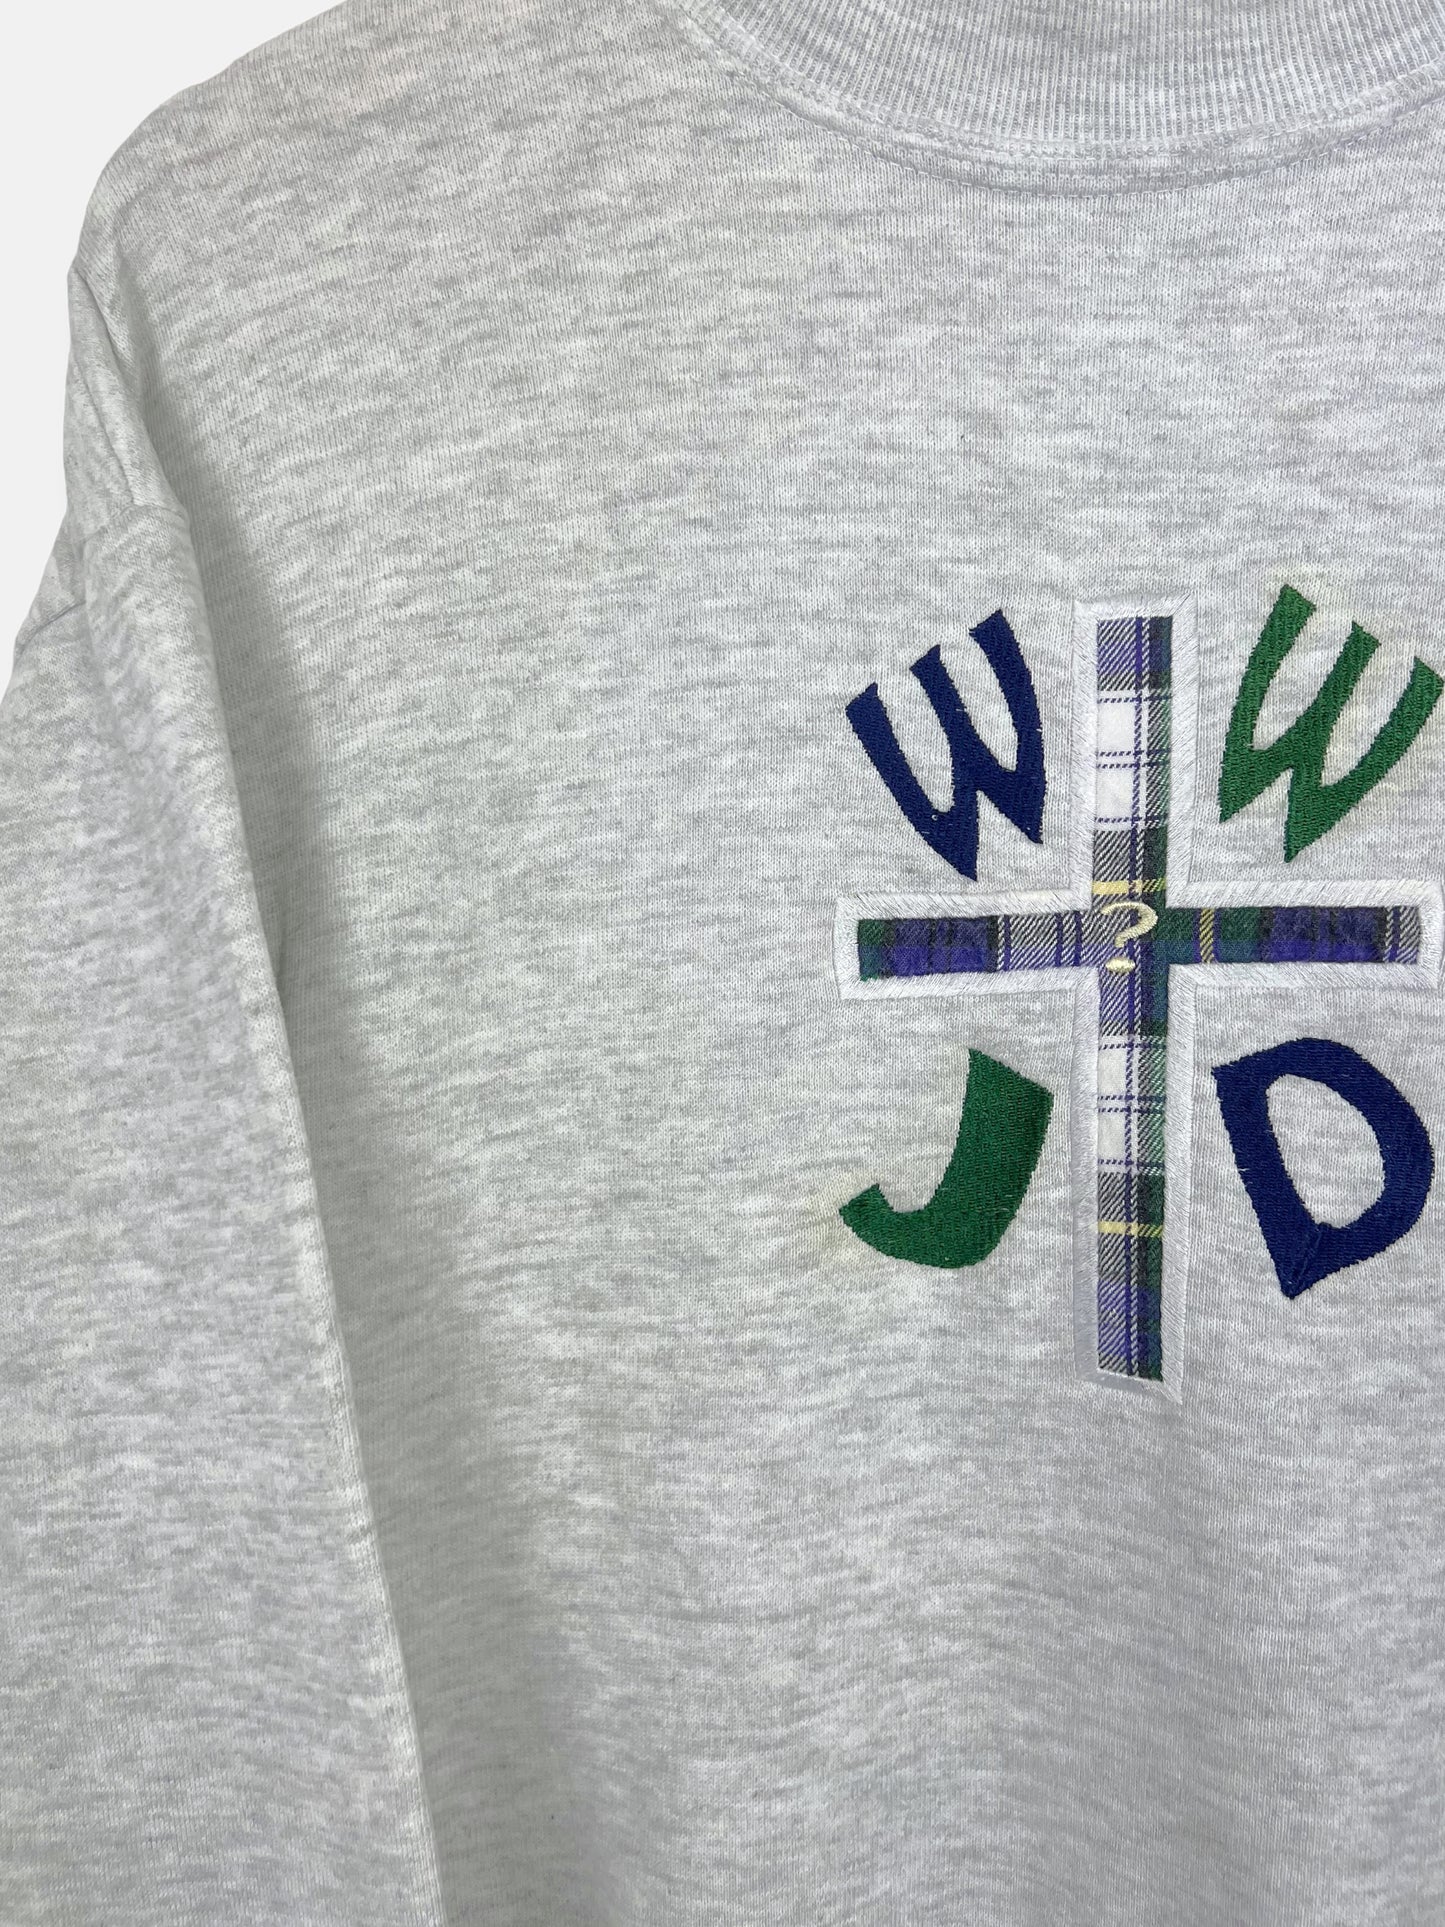 90's WWJD USA Made Embroidered Vintage High-Neck Sweatshirt Size 10